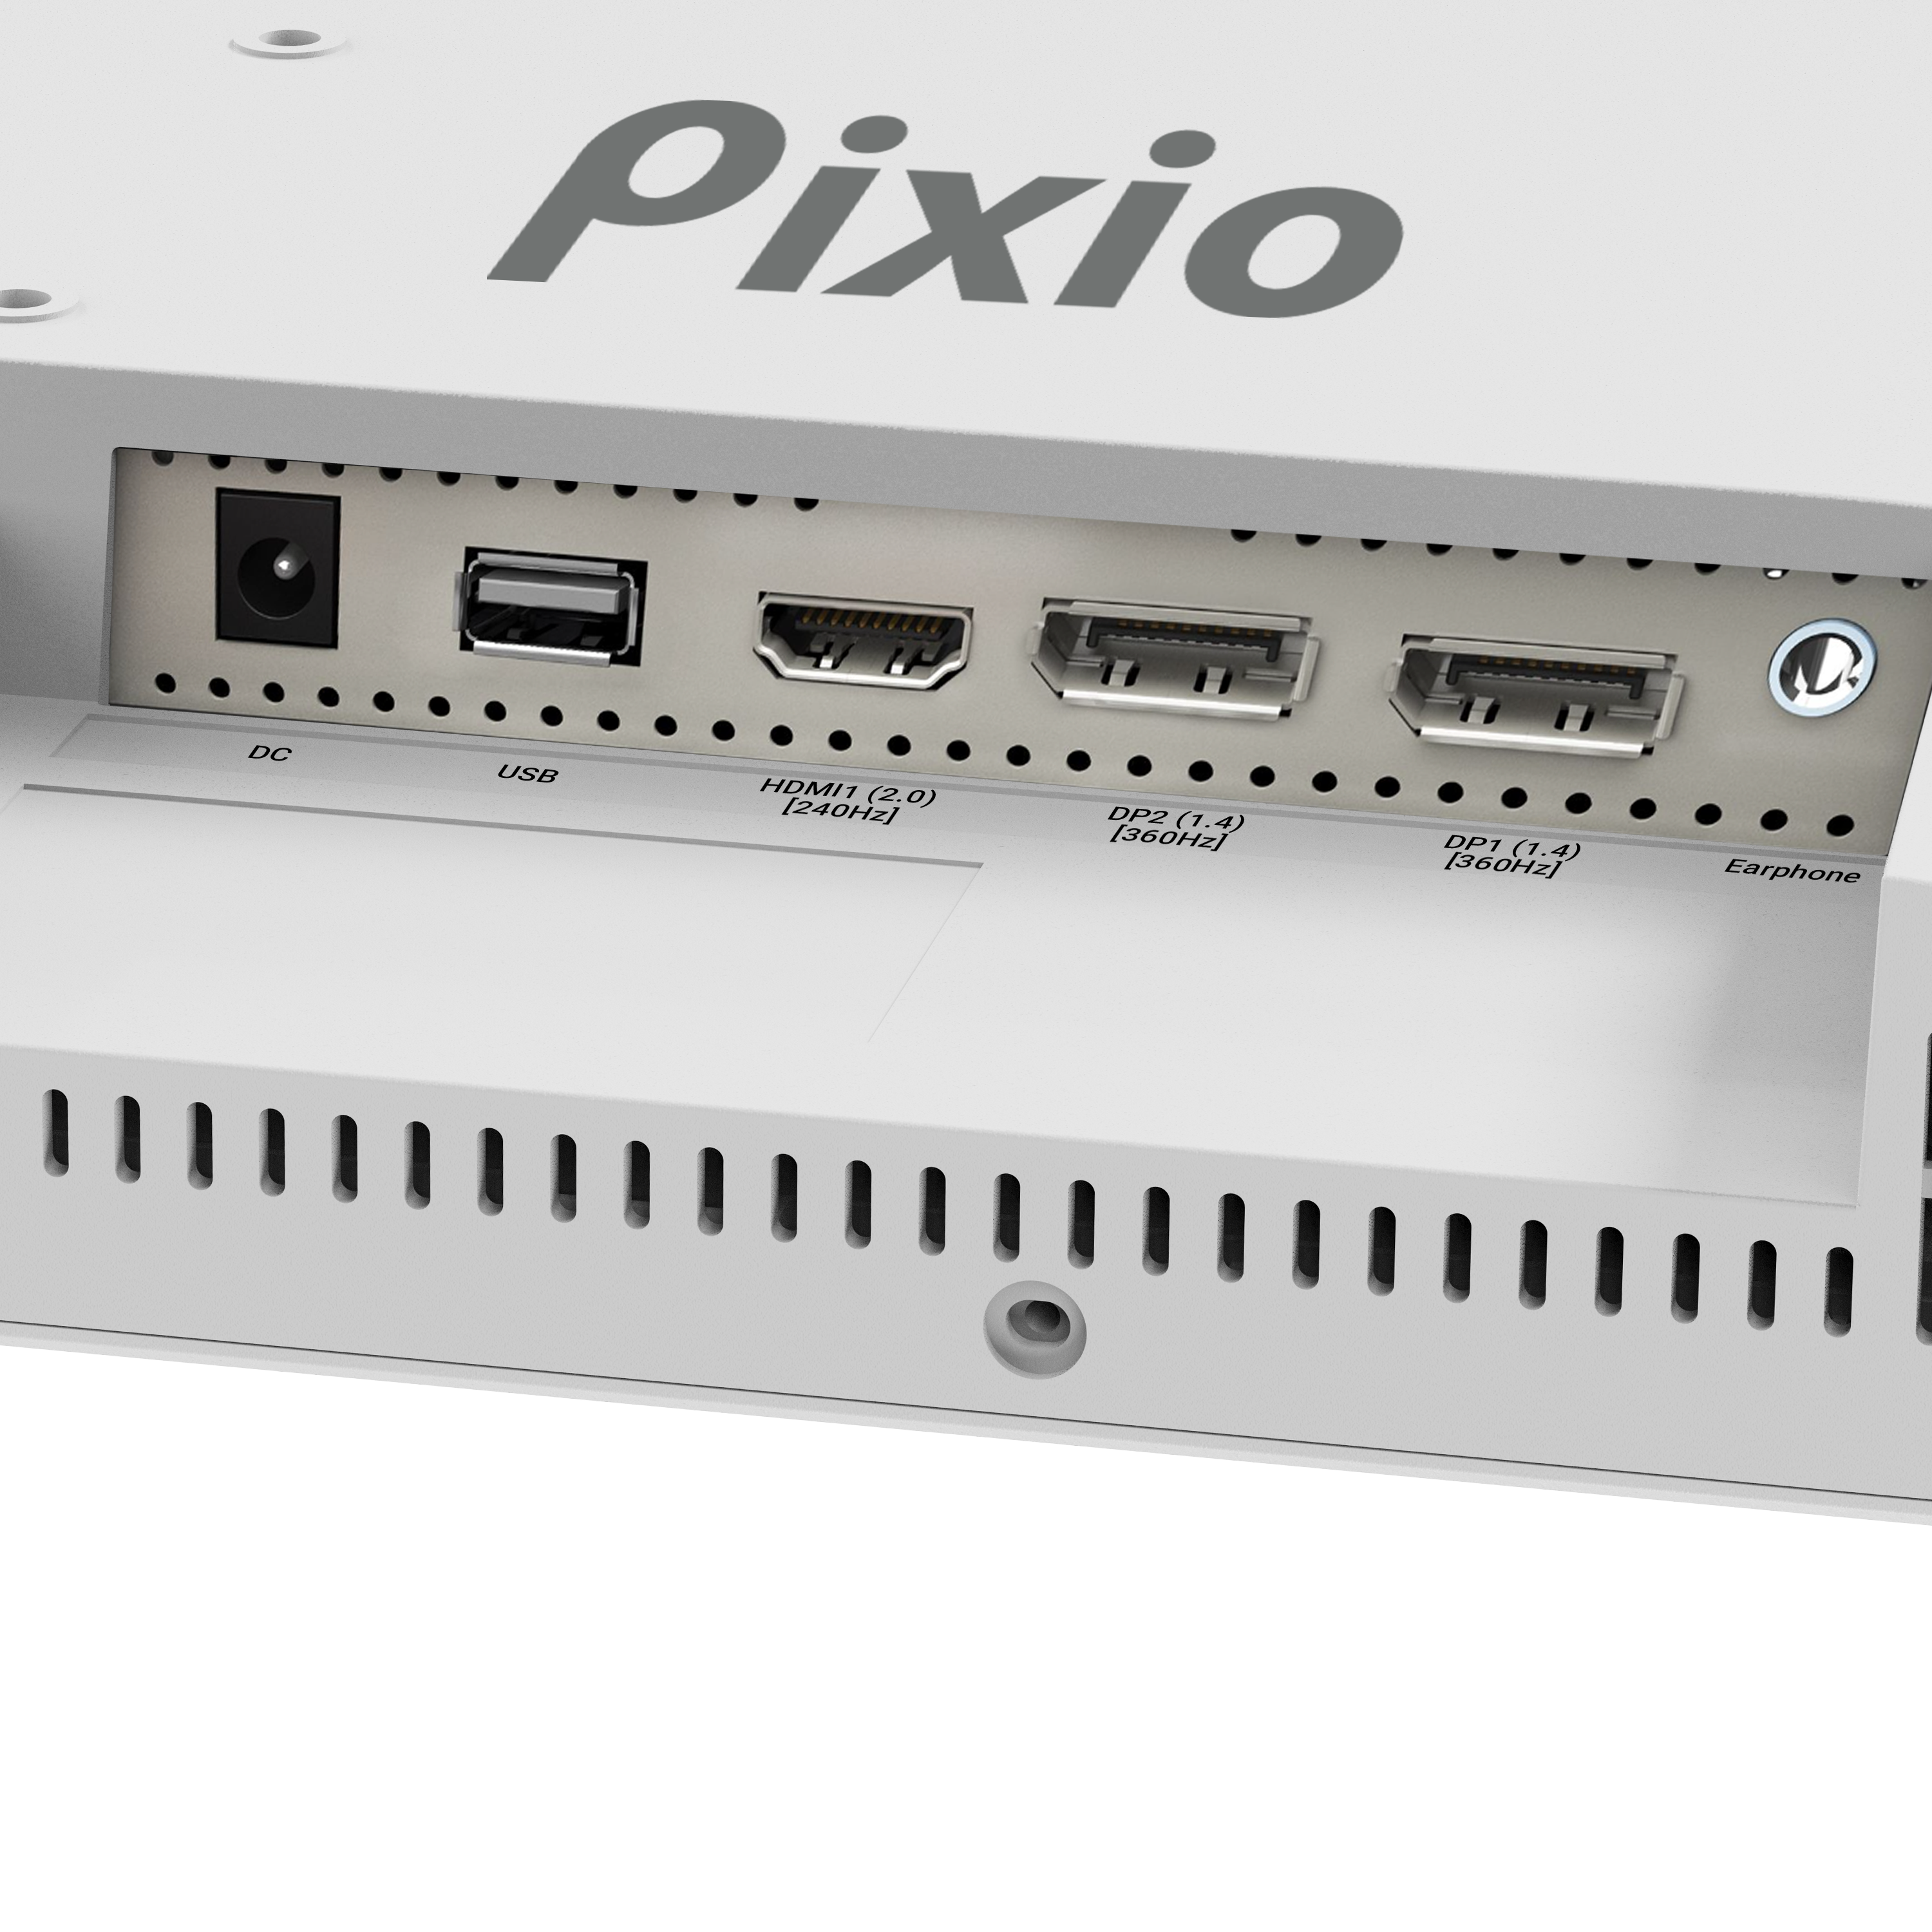 Pixio PX259 Prime S White | 25 inch 1080p 360Hz 1 ms IPS eSports Gaming  Monitor